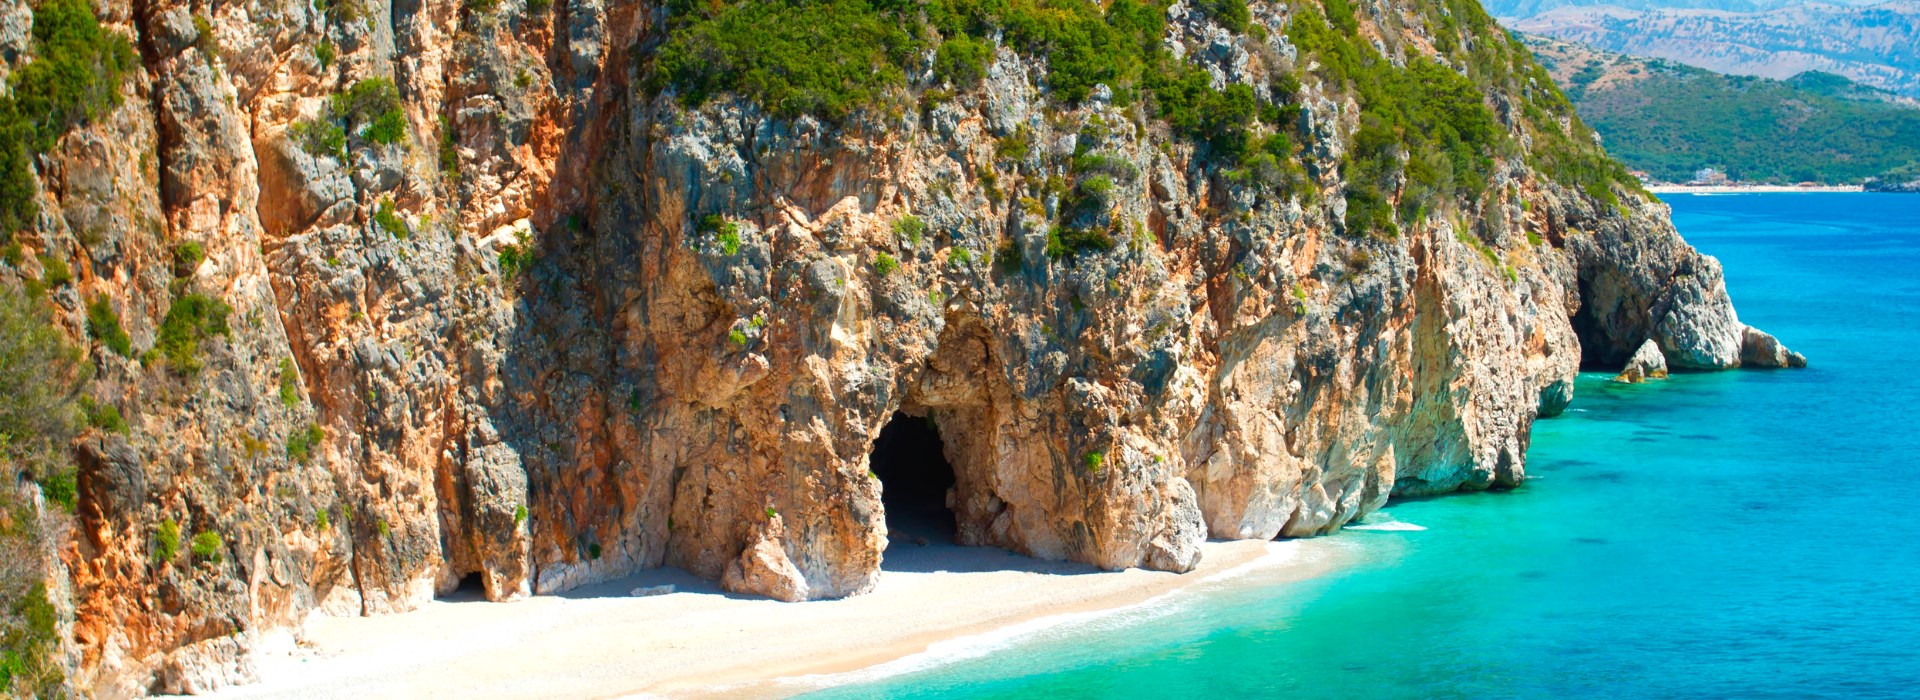 Visiter La grotte des Pirates - Albanie